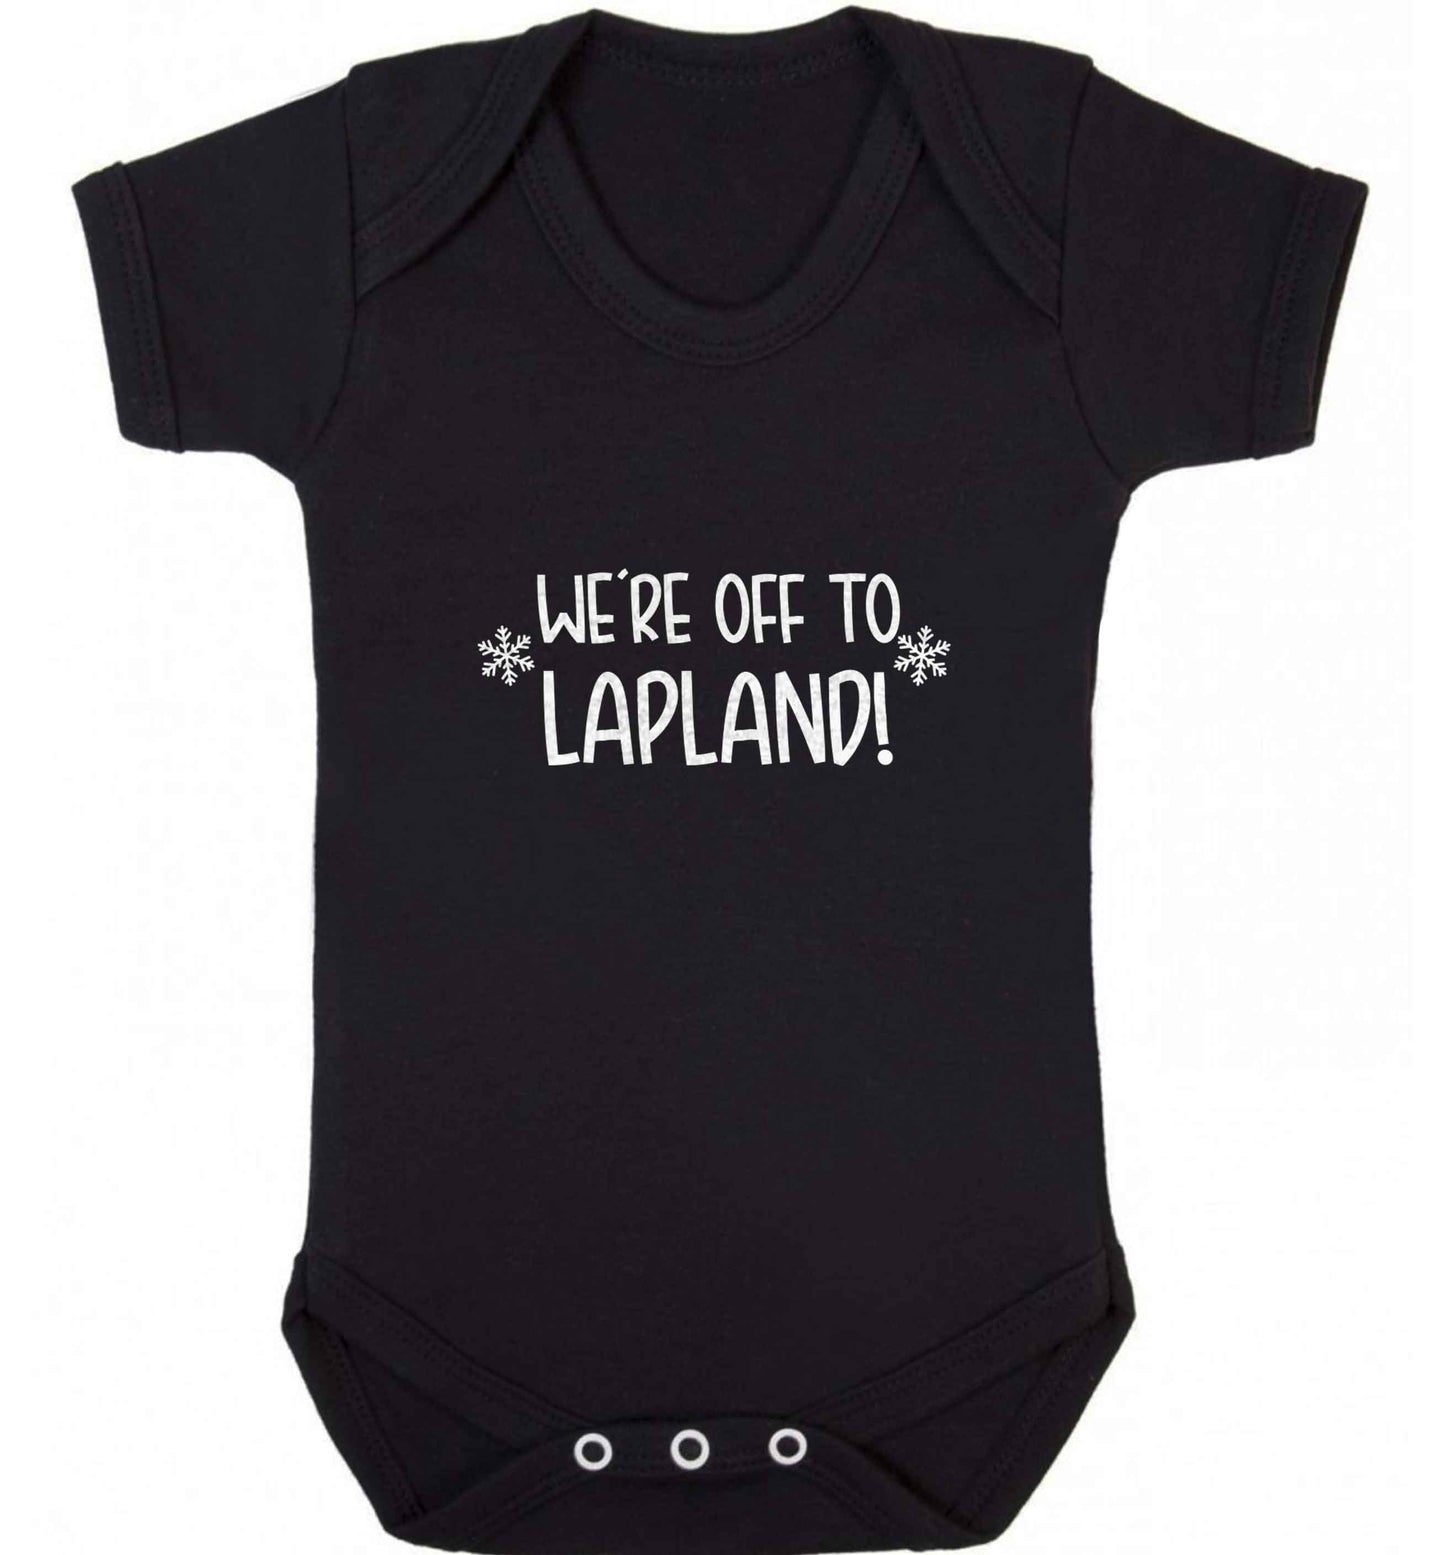 We're off to Lapland baby vest black 18-24 months